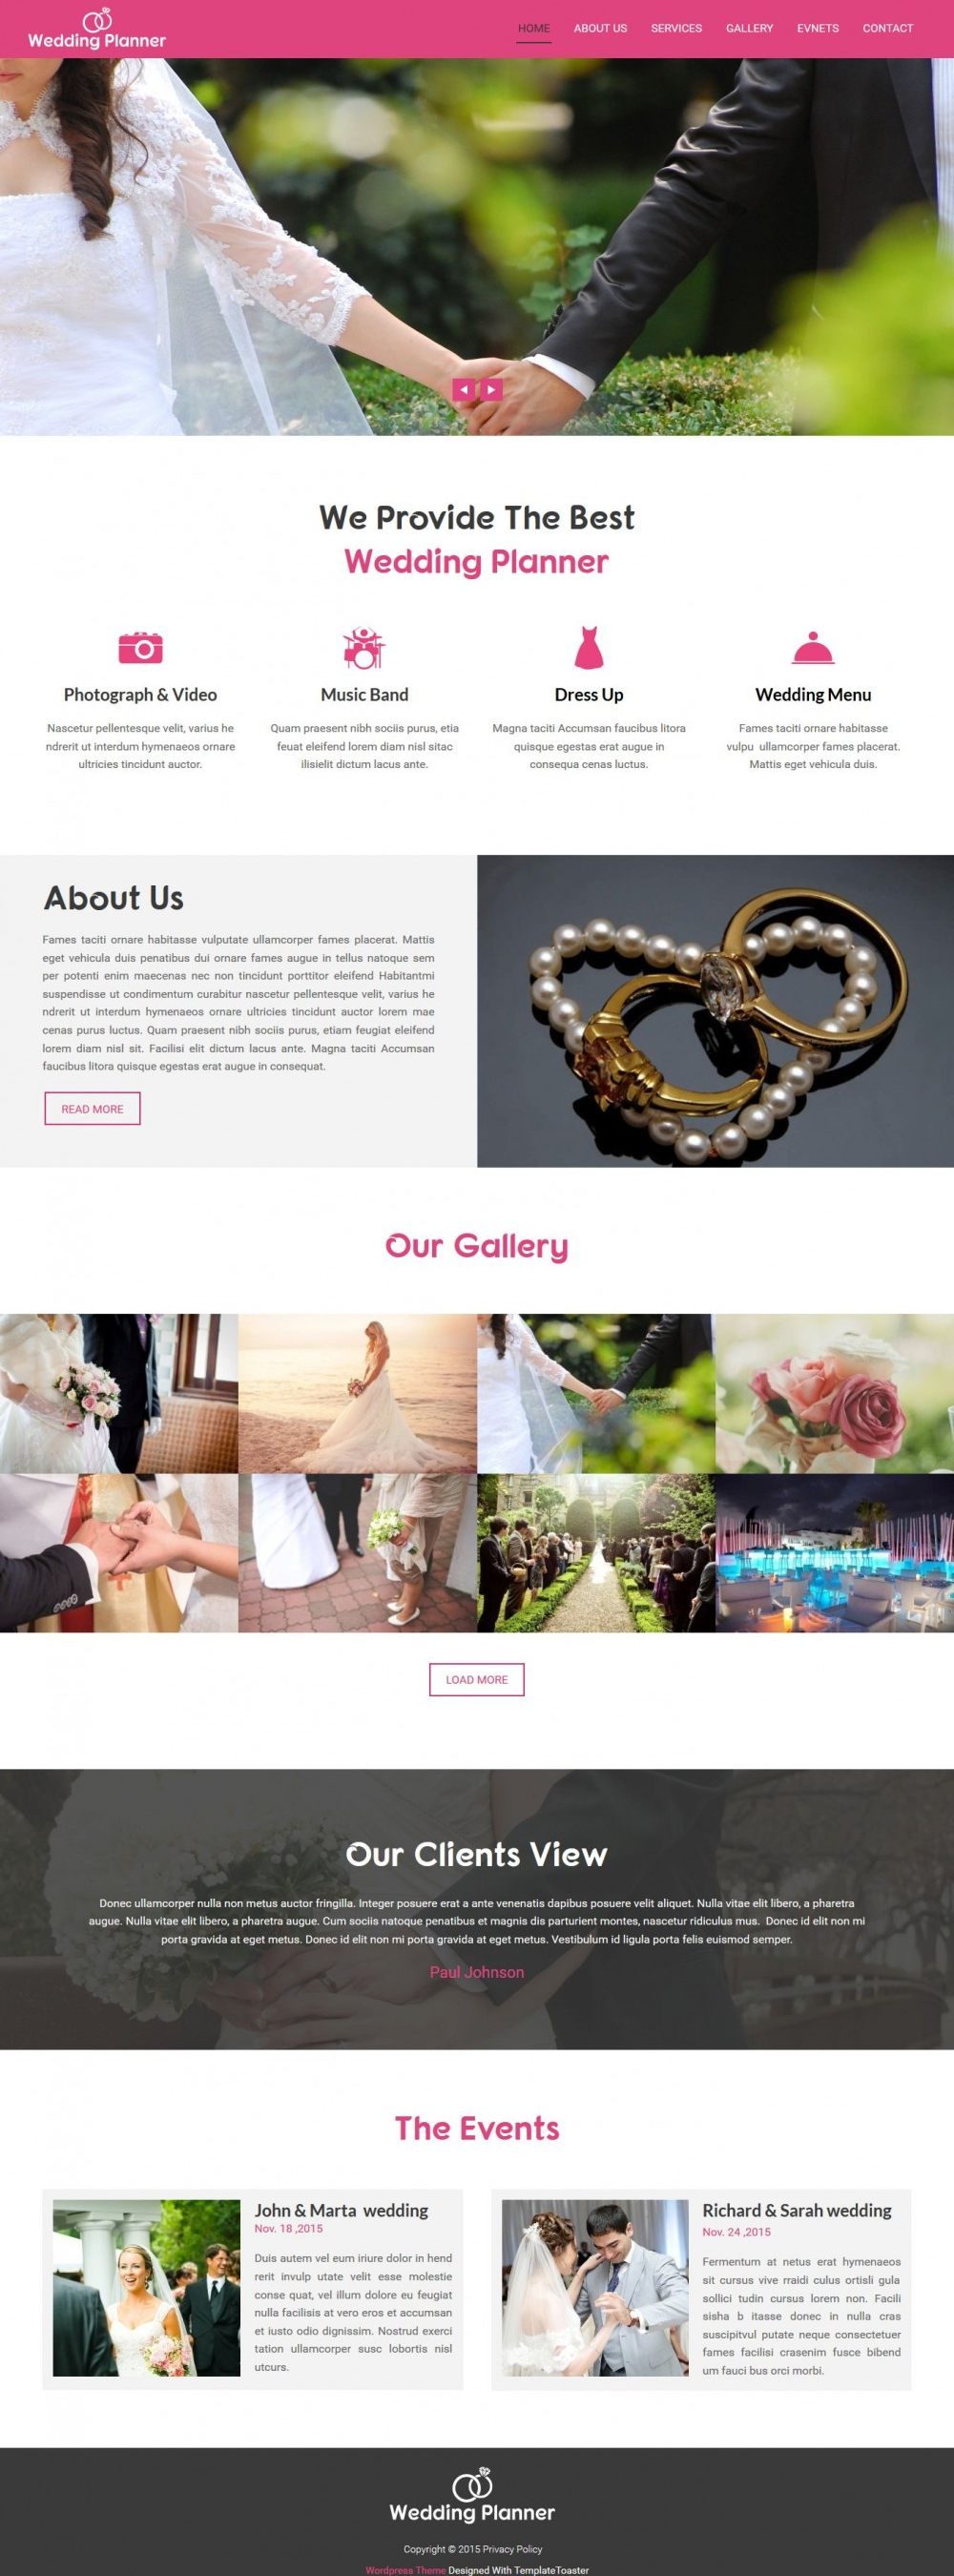 Wedding Planner - Wedding Planner And Wedding Organizer Free Wordpress Theme